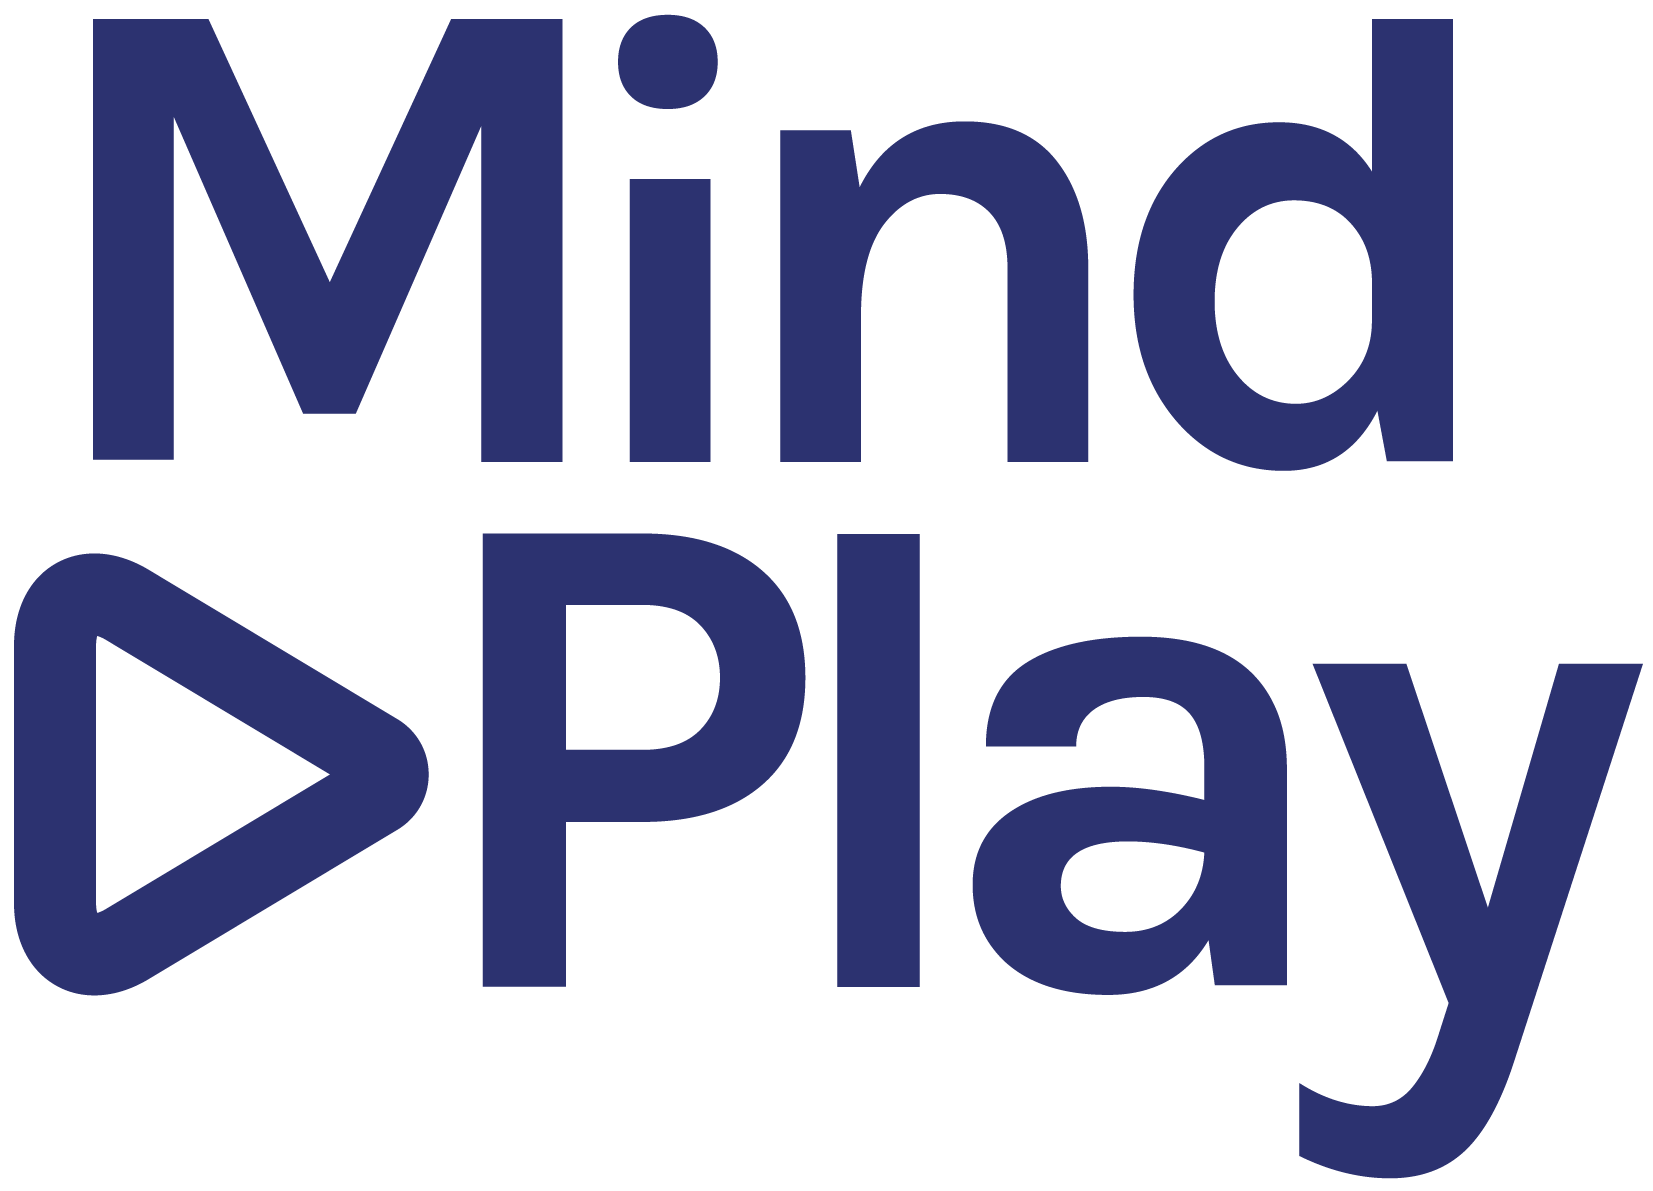 MindPlay Logo